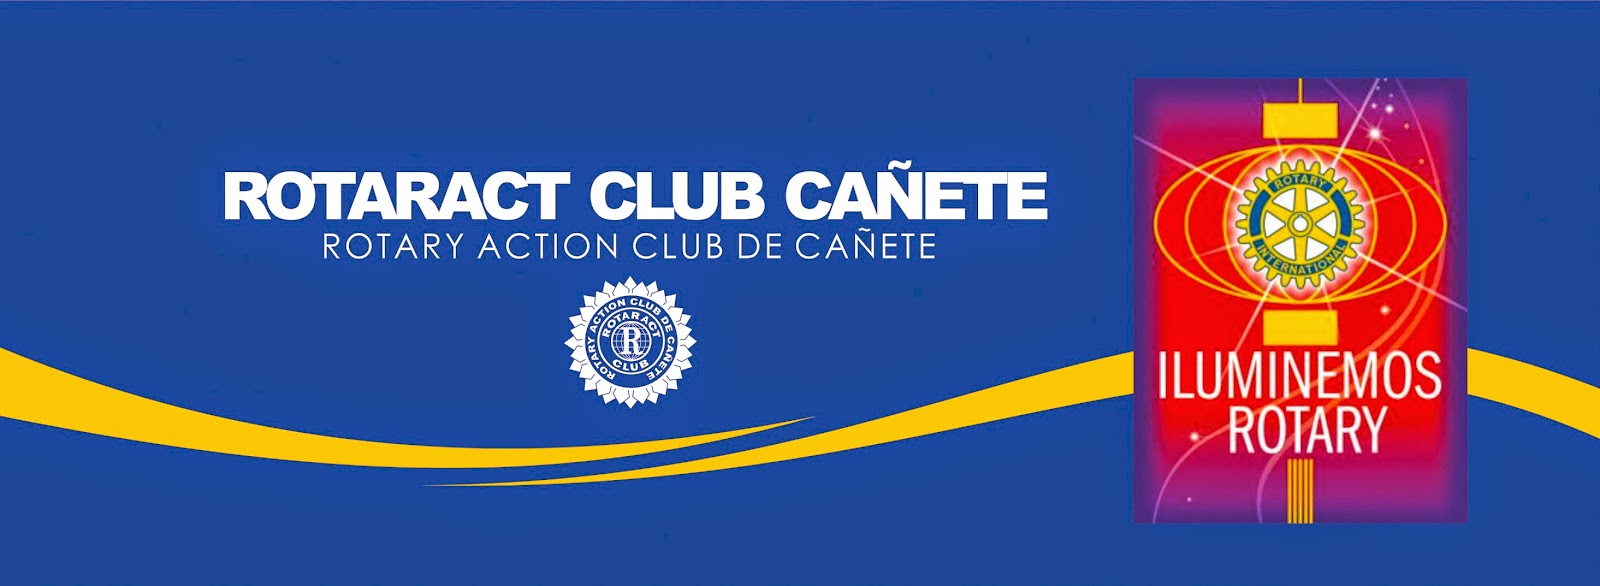 ROTARACT CLUB CAÑETE